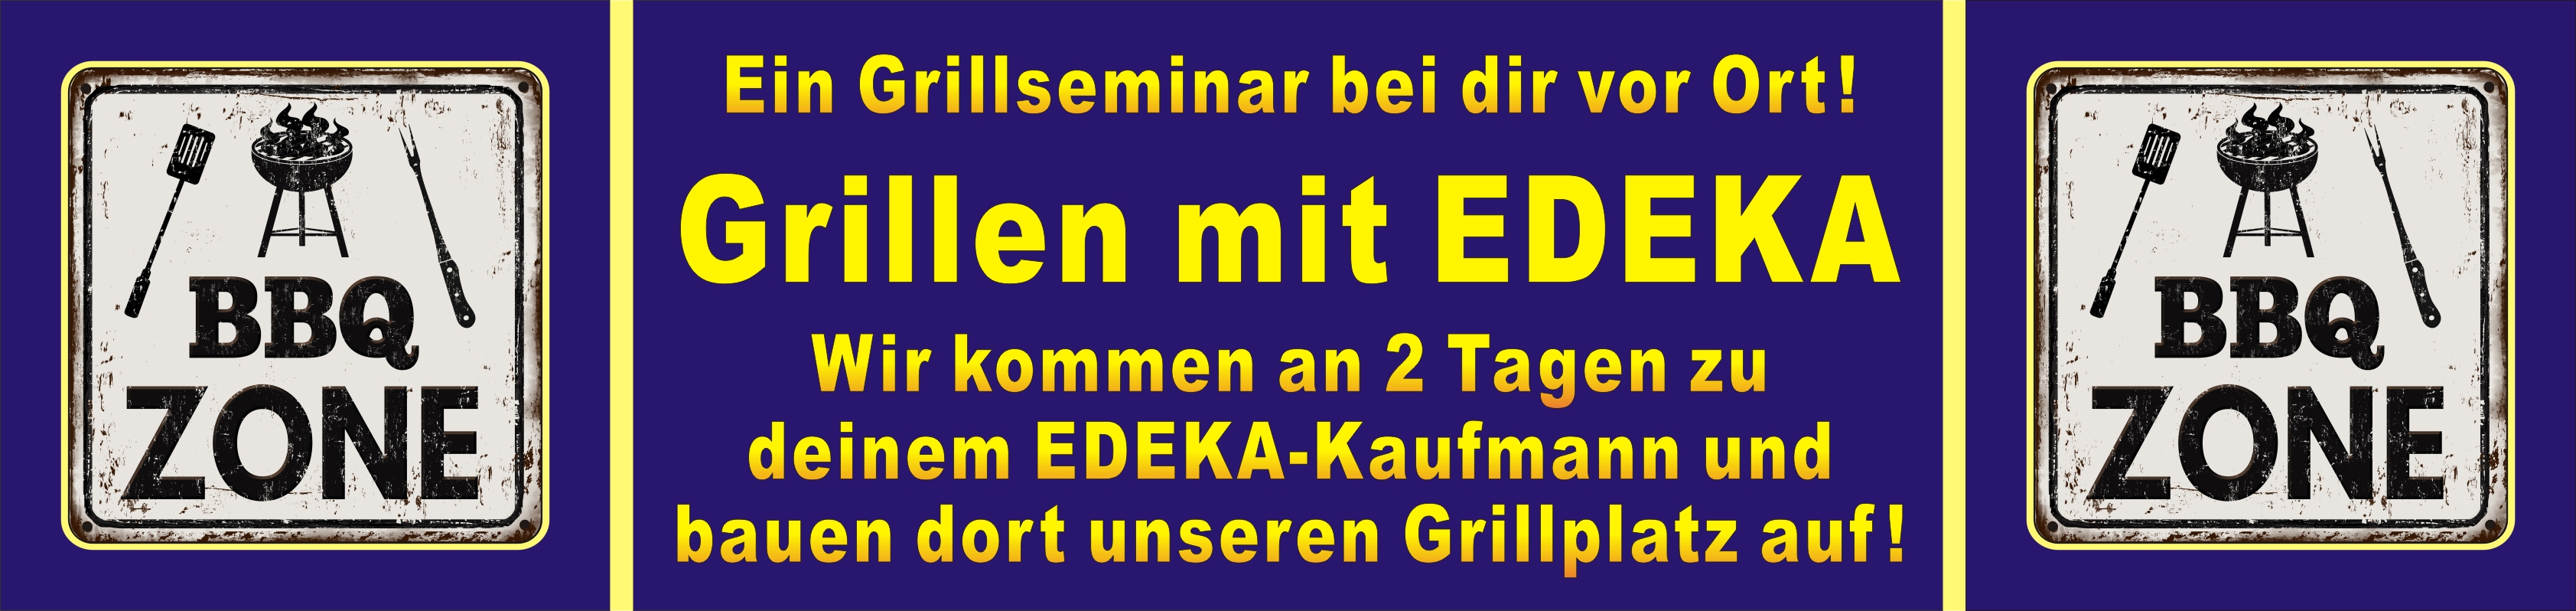 Grillkurs --- Grillen mit EDEKA --- Kochkurs in Osnabrück, Bielefeld, Gütersloh, Paderborn...